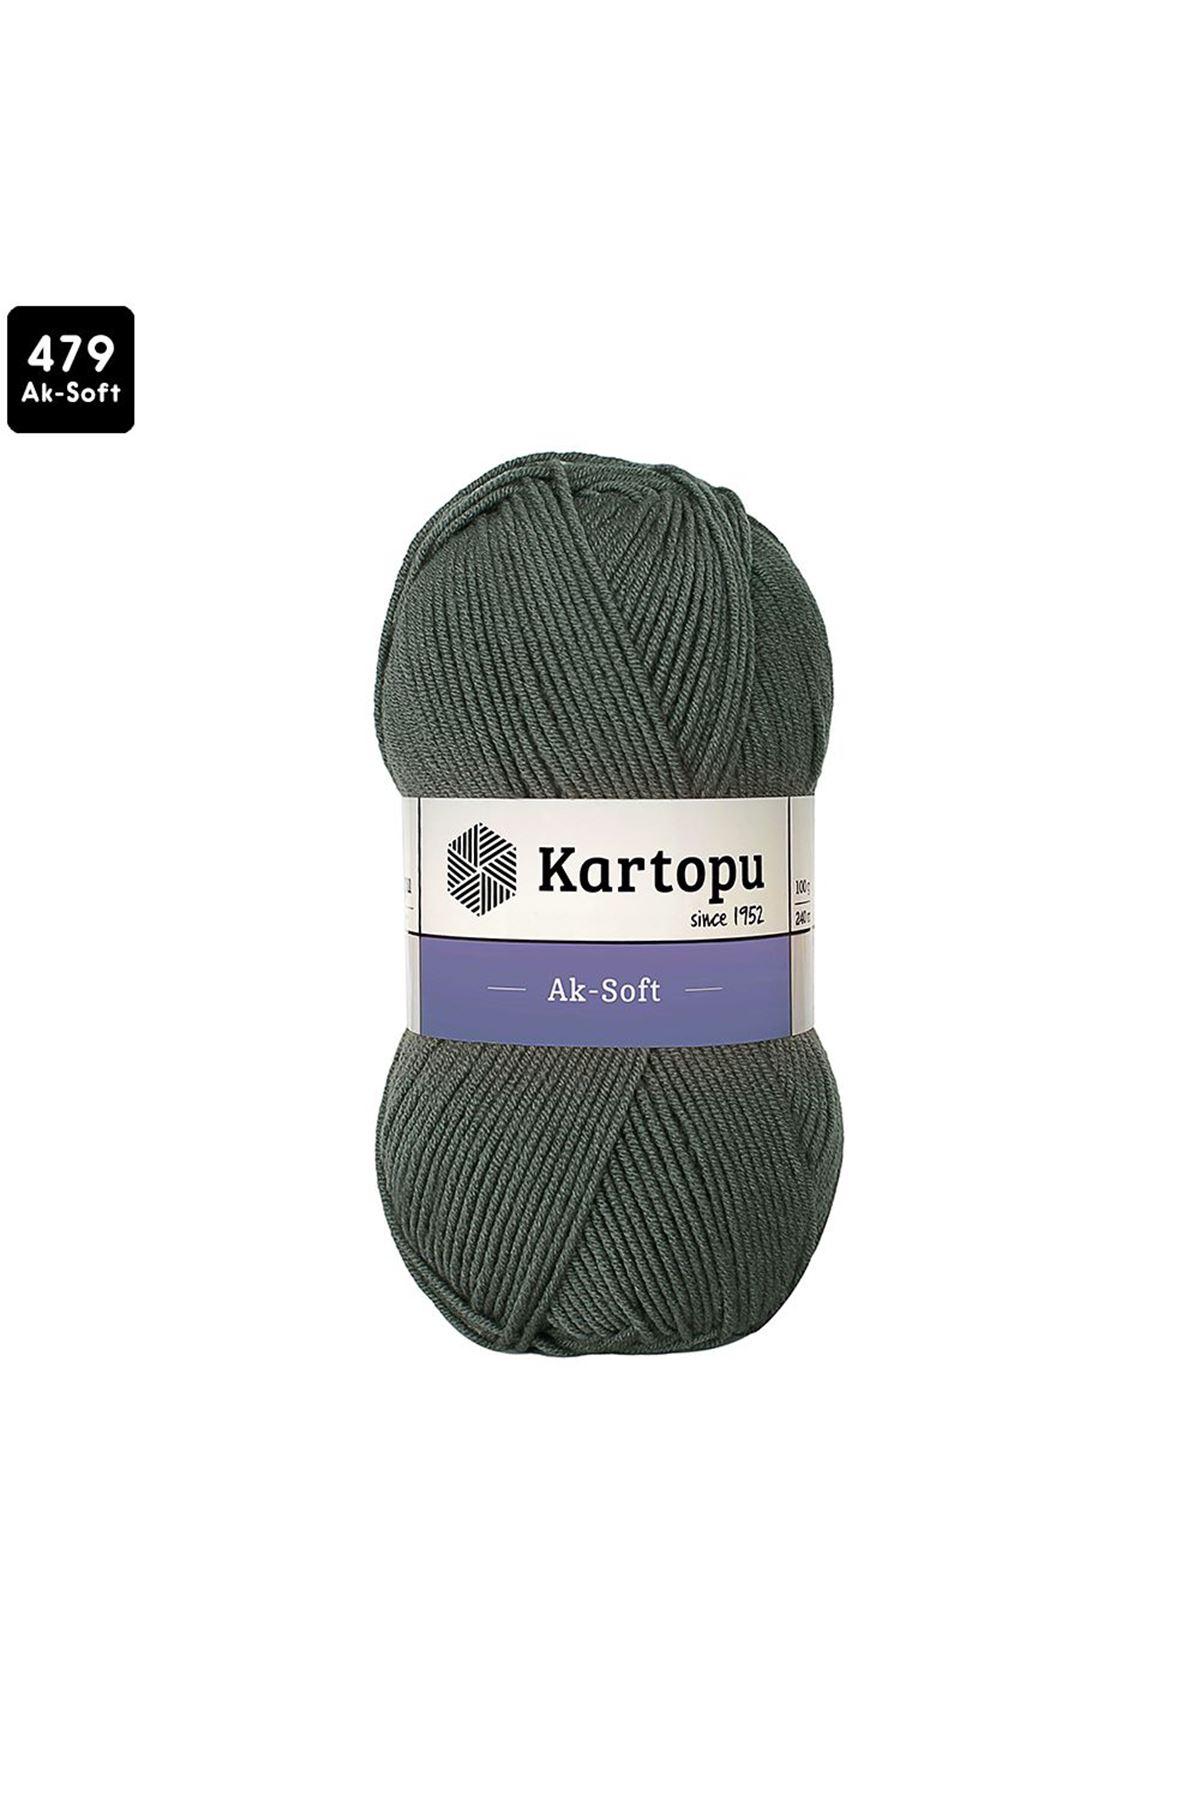 Kartopu Ak-Soft Renk No:479